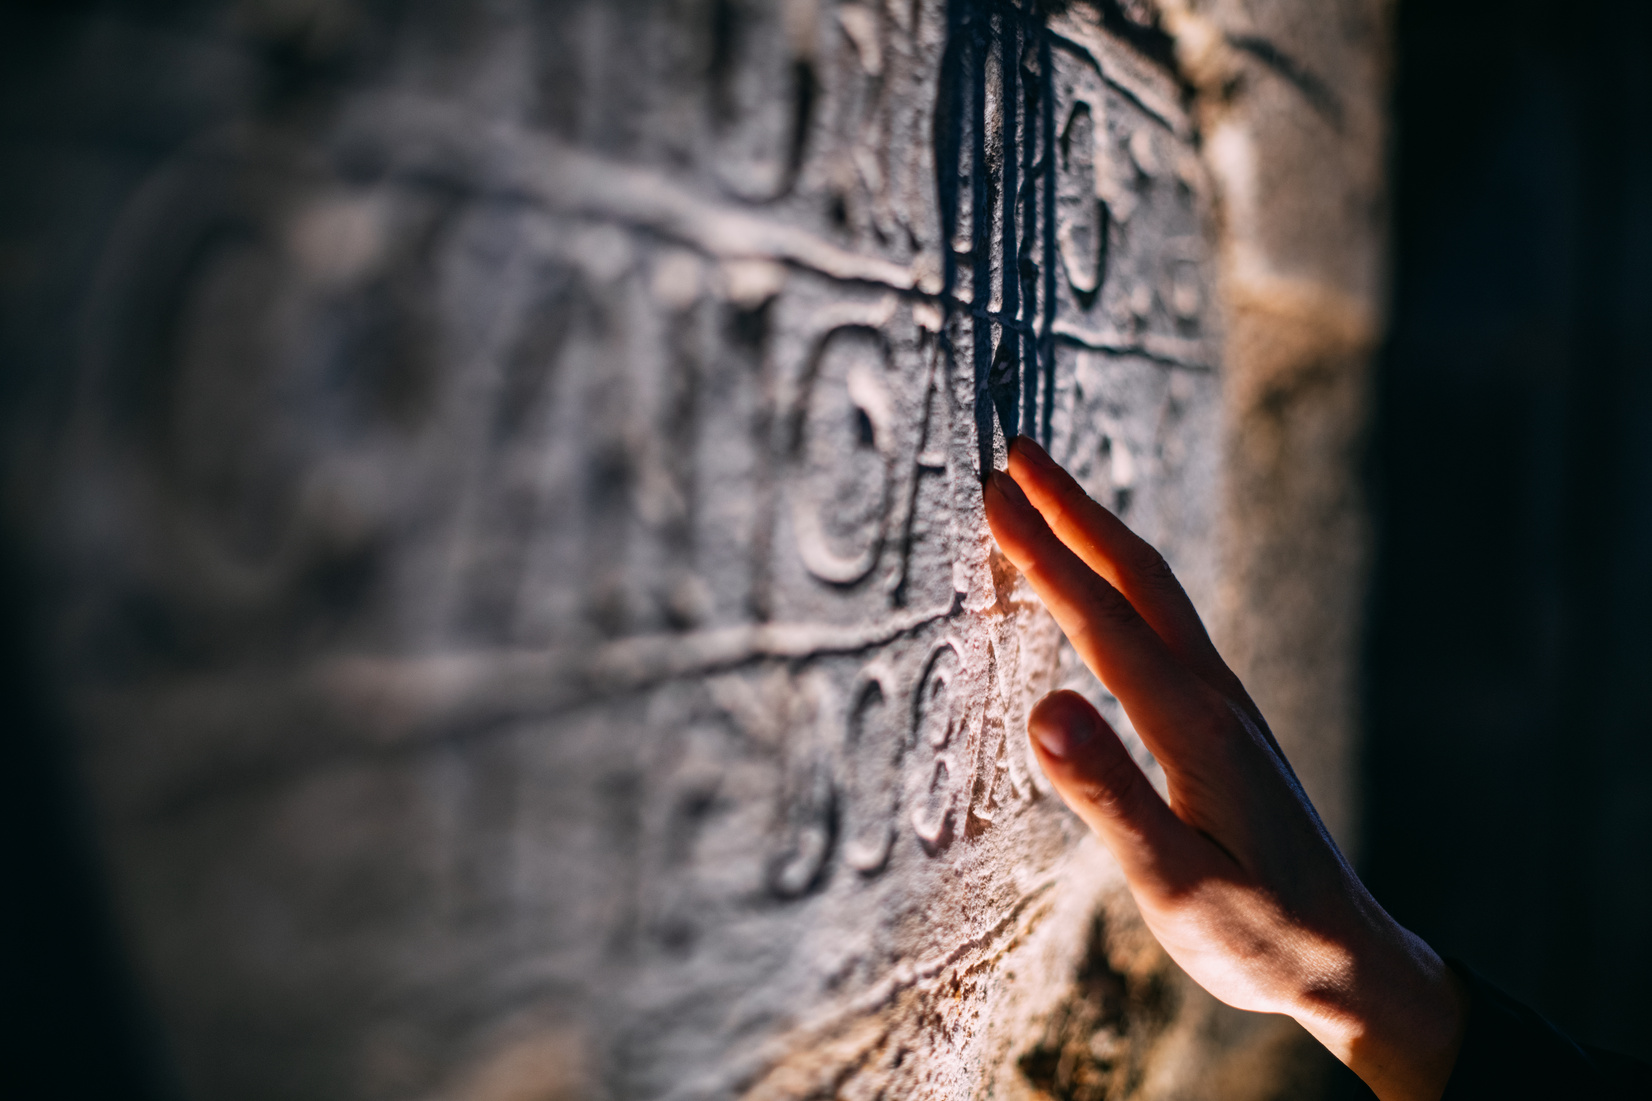 Archaeologist Examines Ancient Inscription